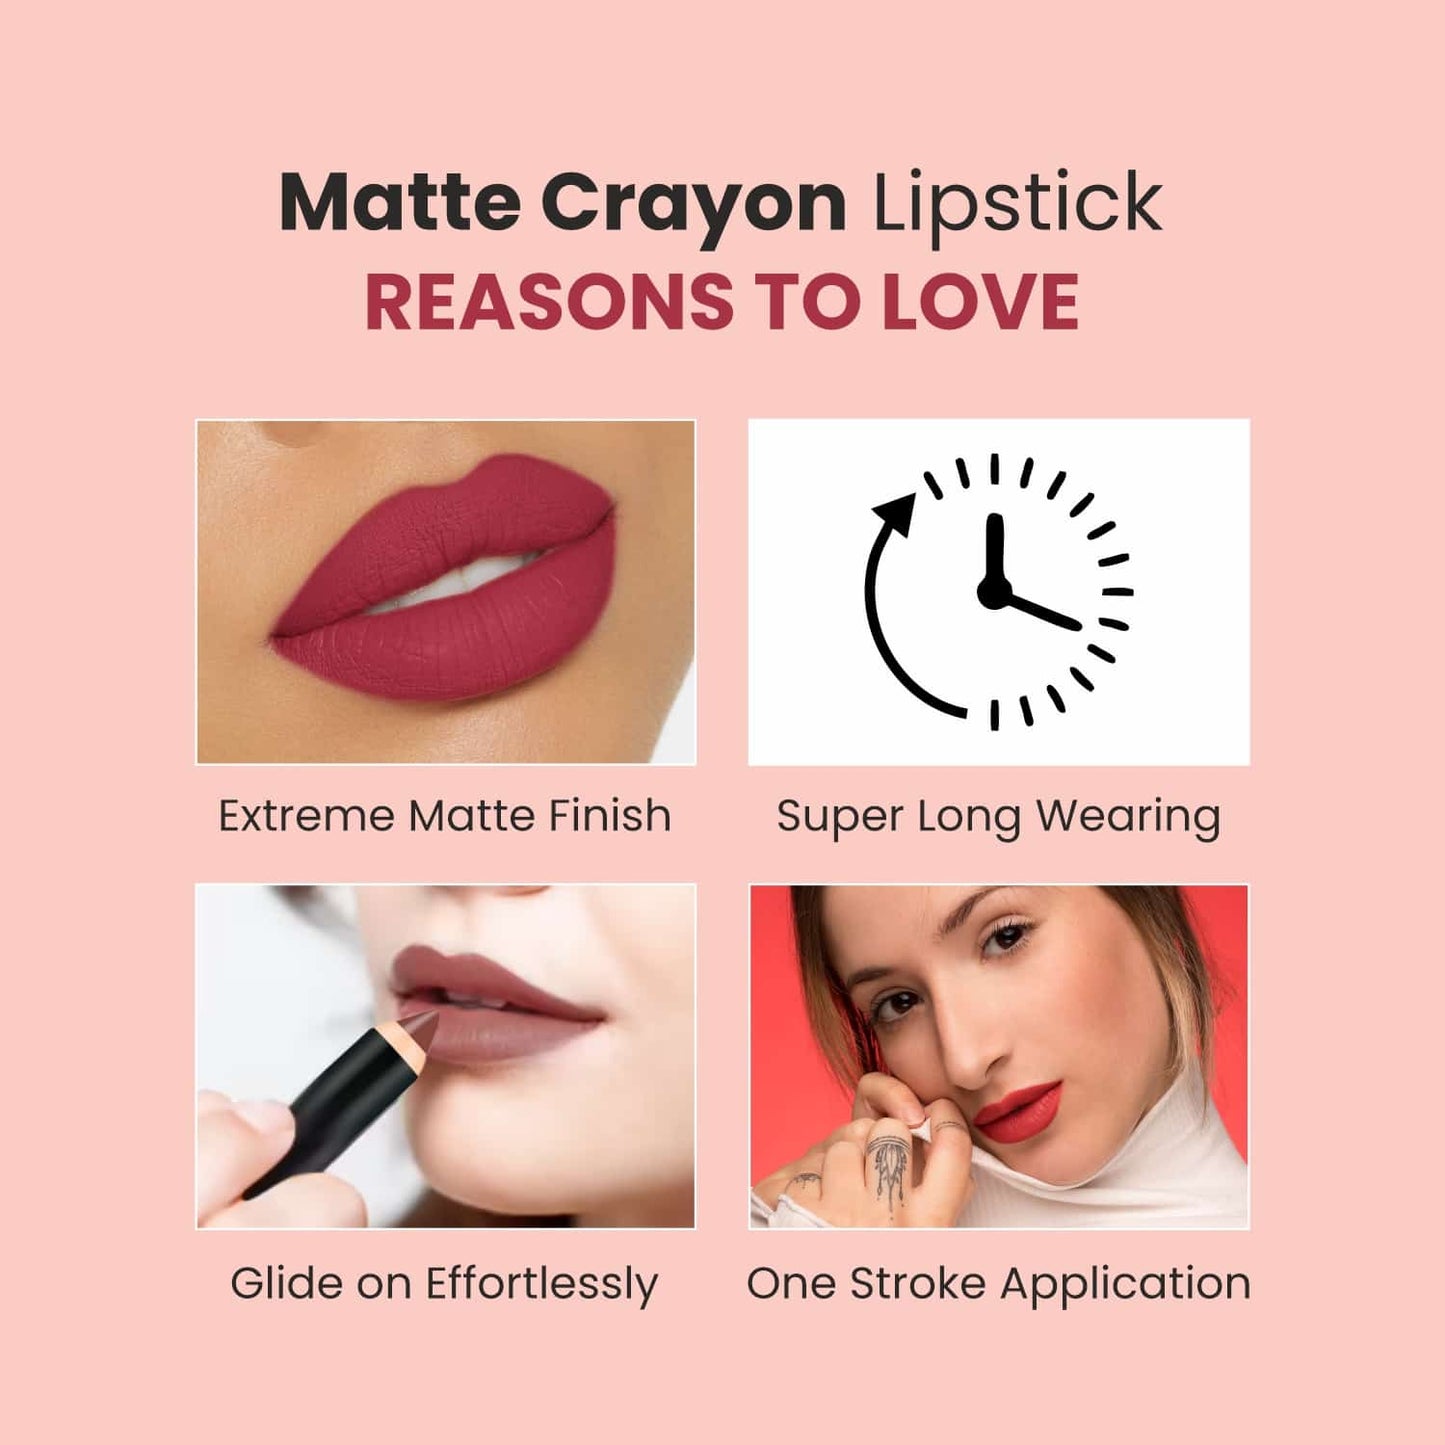 Matte Lip Crayon Lipstick - 14 Dark Pecan